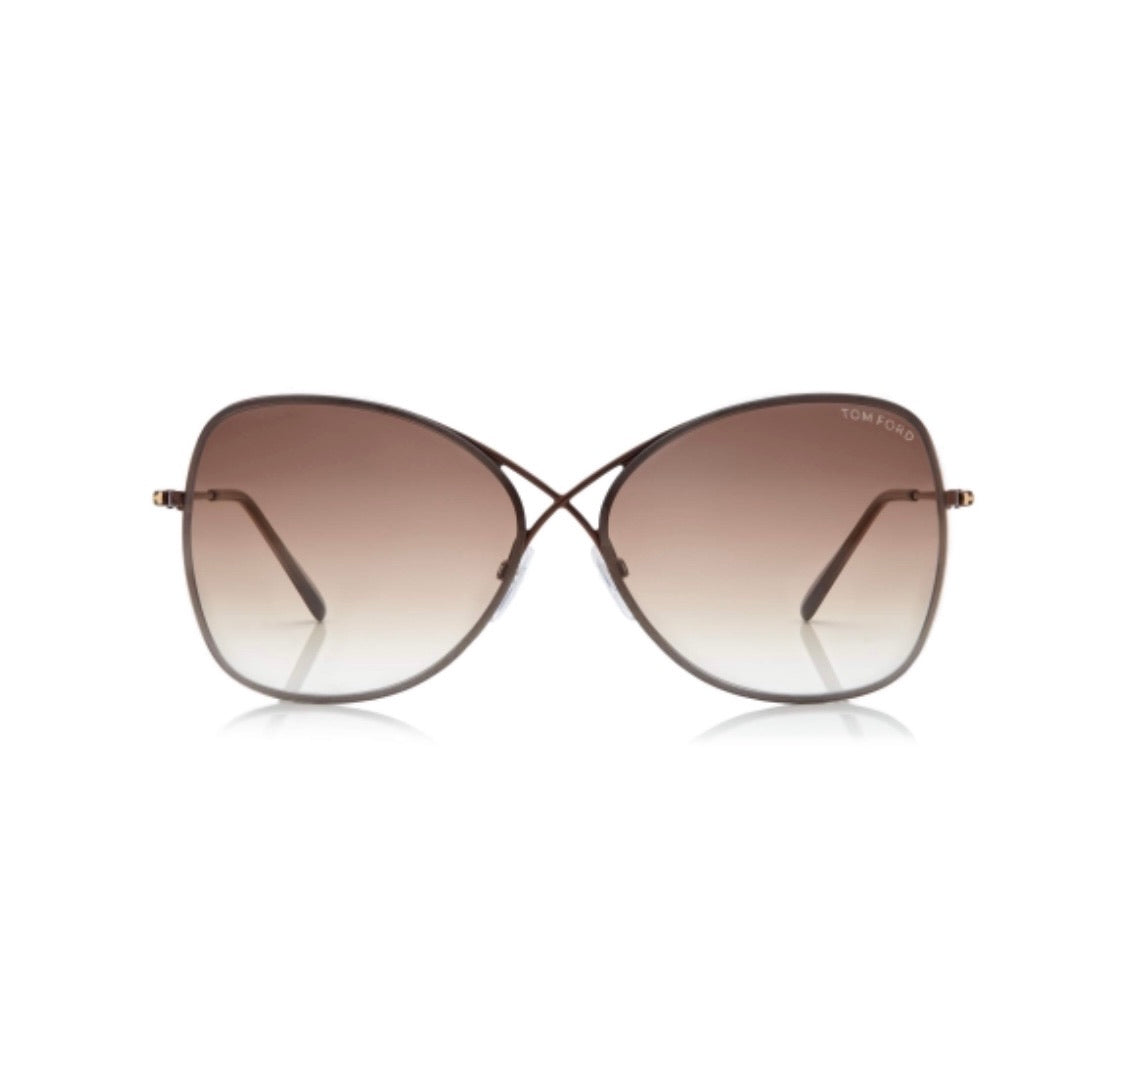 Tom Ford Colette Sunglasses